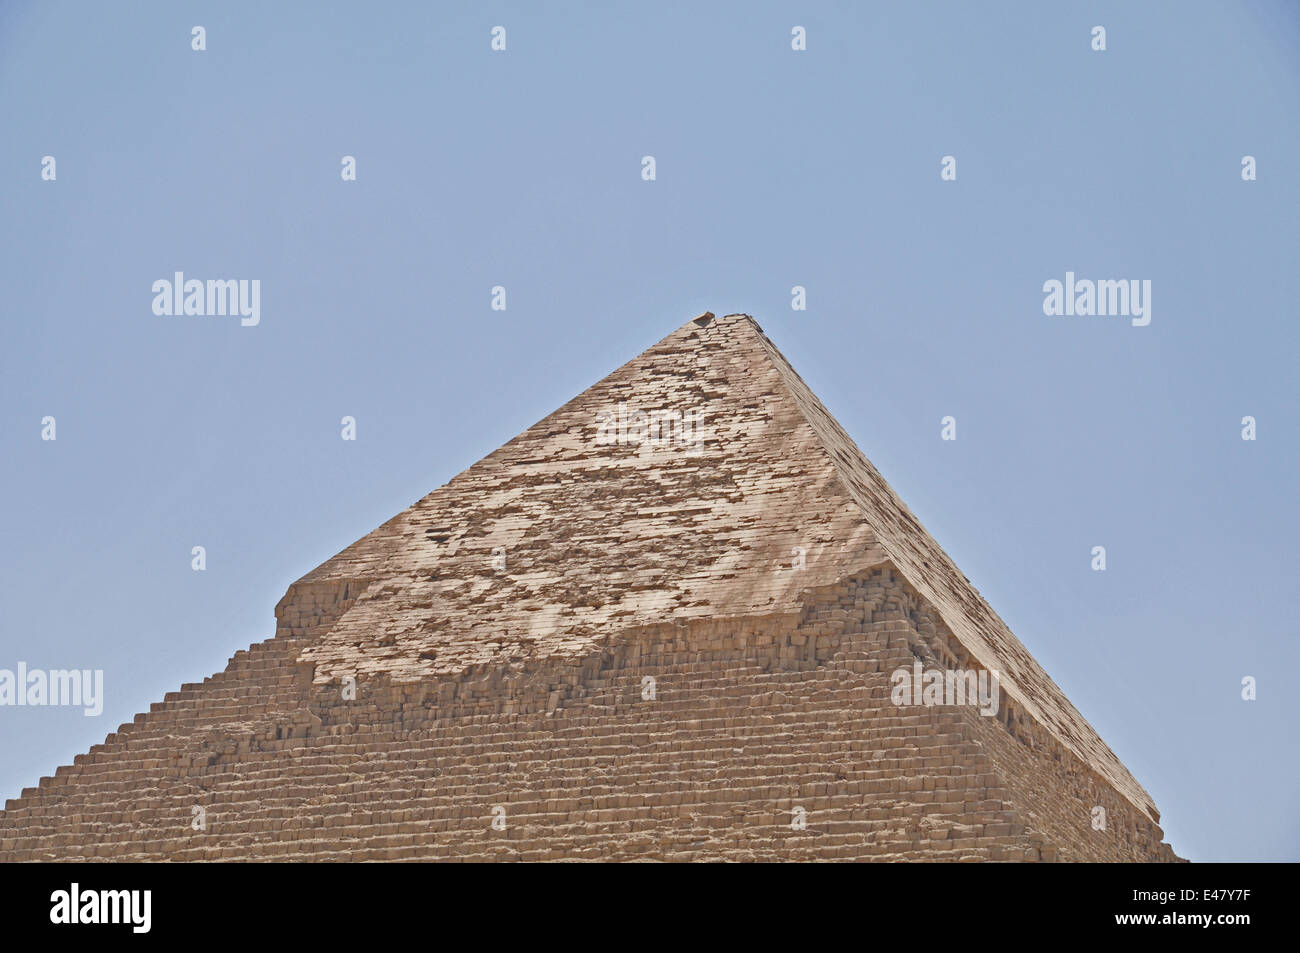 Pyramids of Ancient Egypt Stock Photo - Alamy